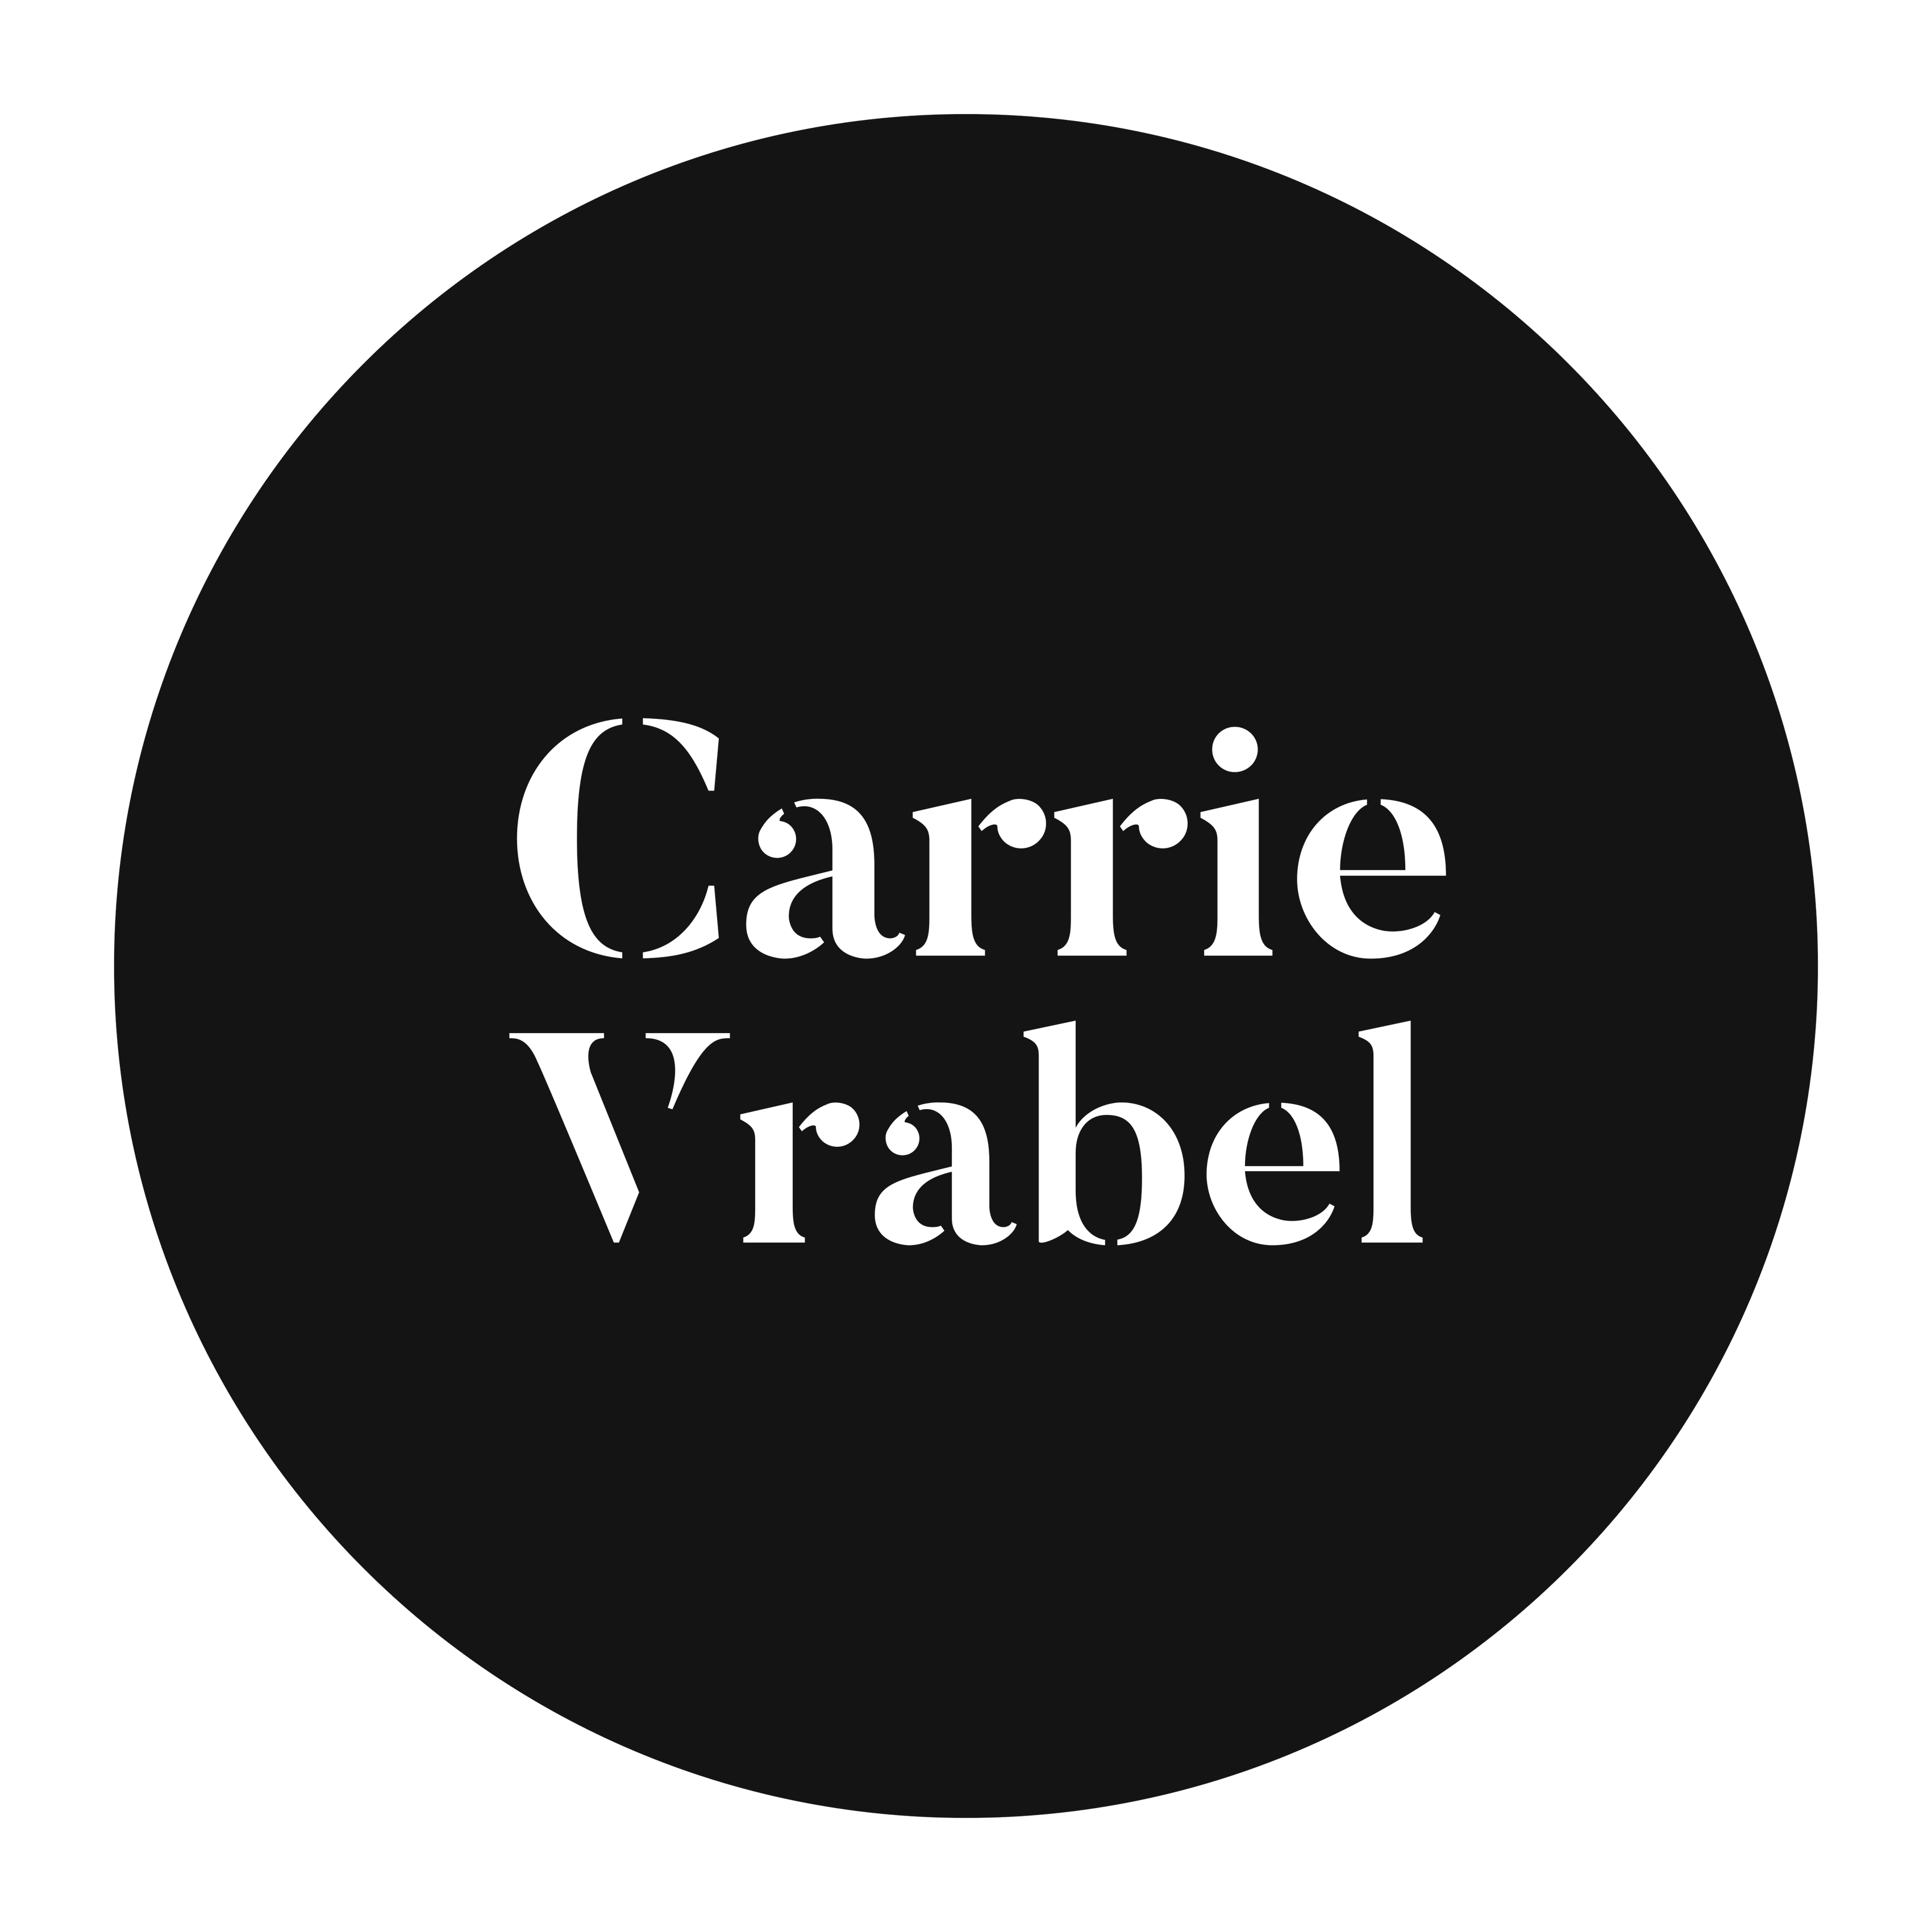 Carrie Vrabel